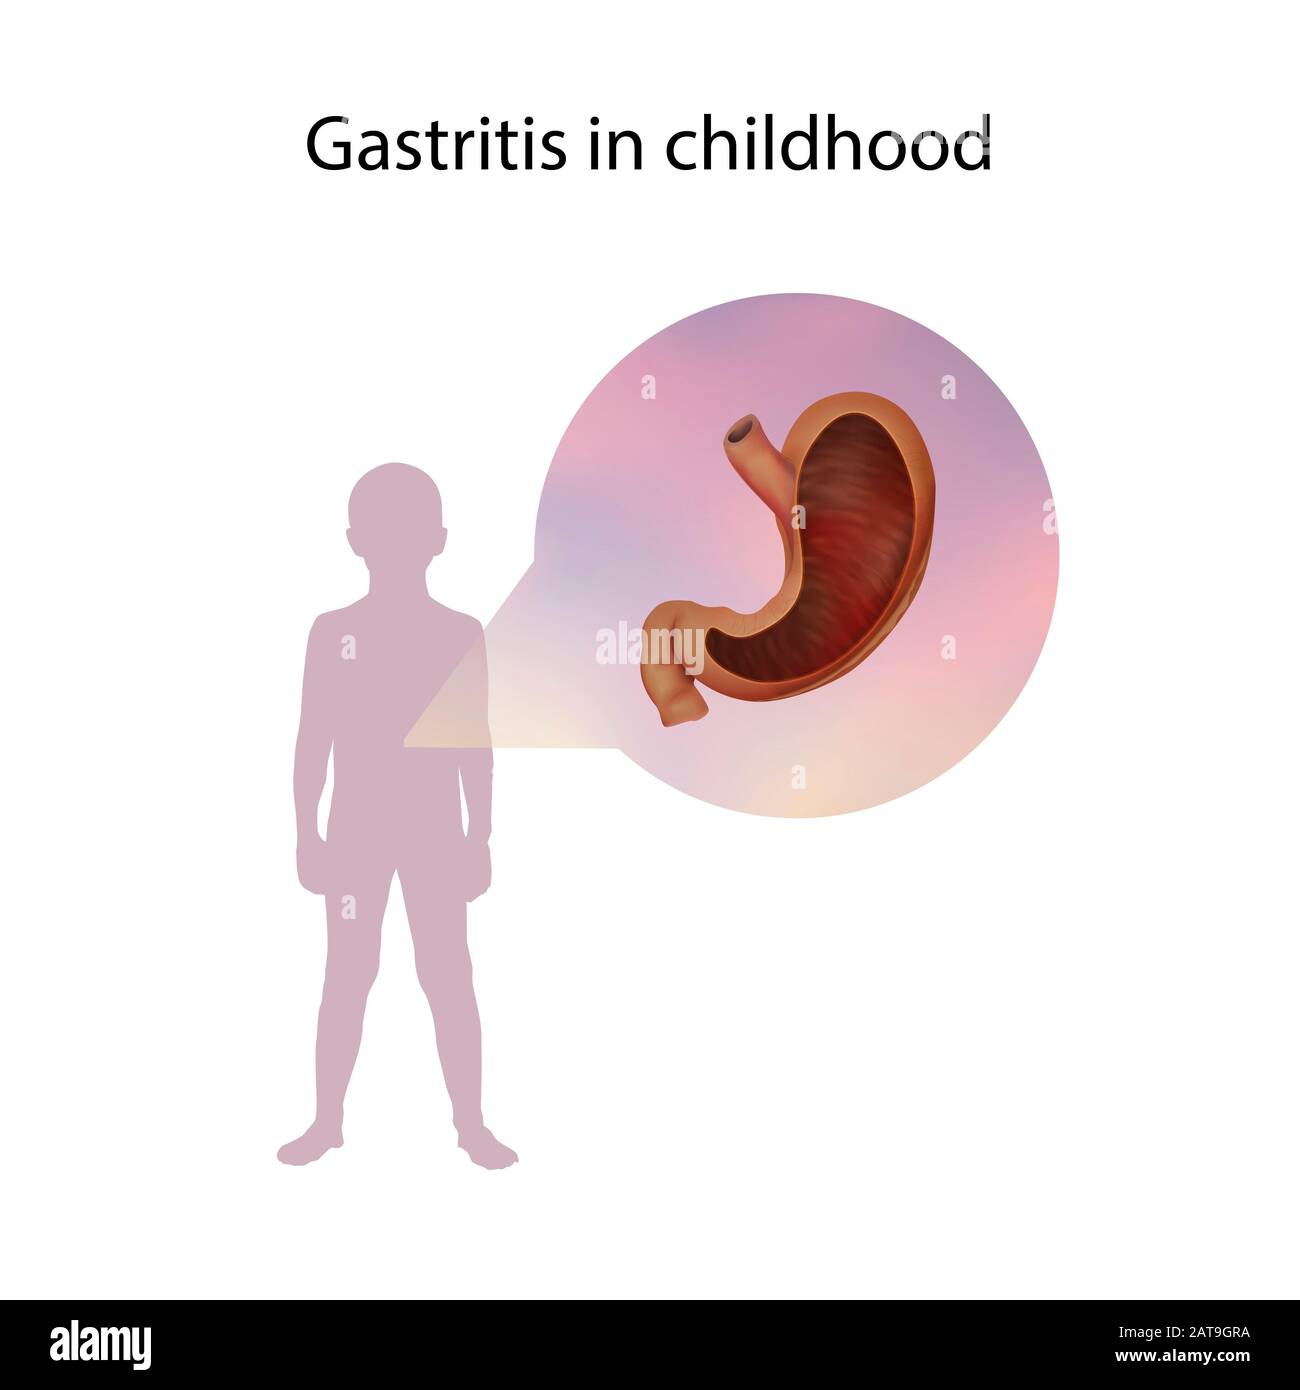 Gastritis in childhood, illustration Stock Photo